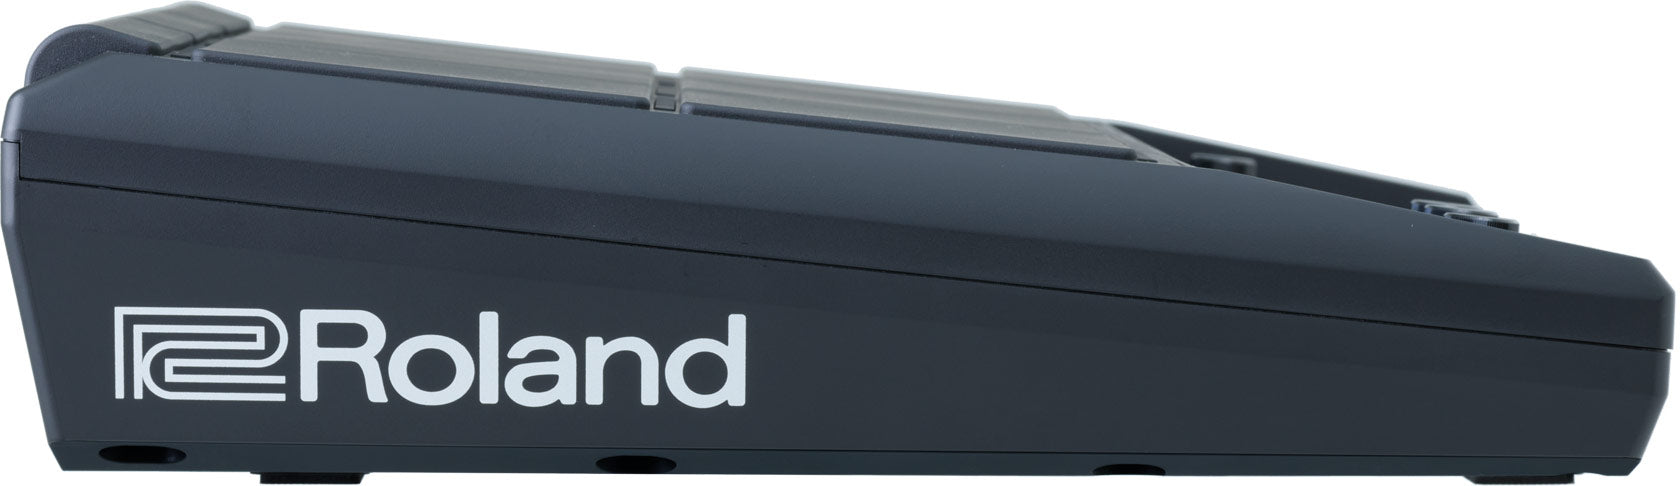 Roland SPD-SX PRO Sampling pad